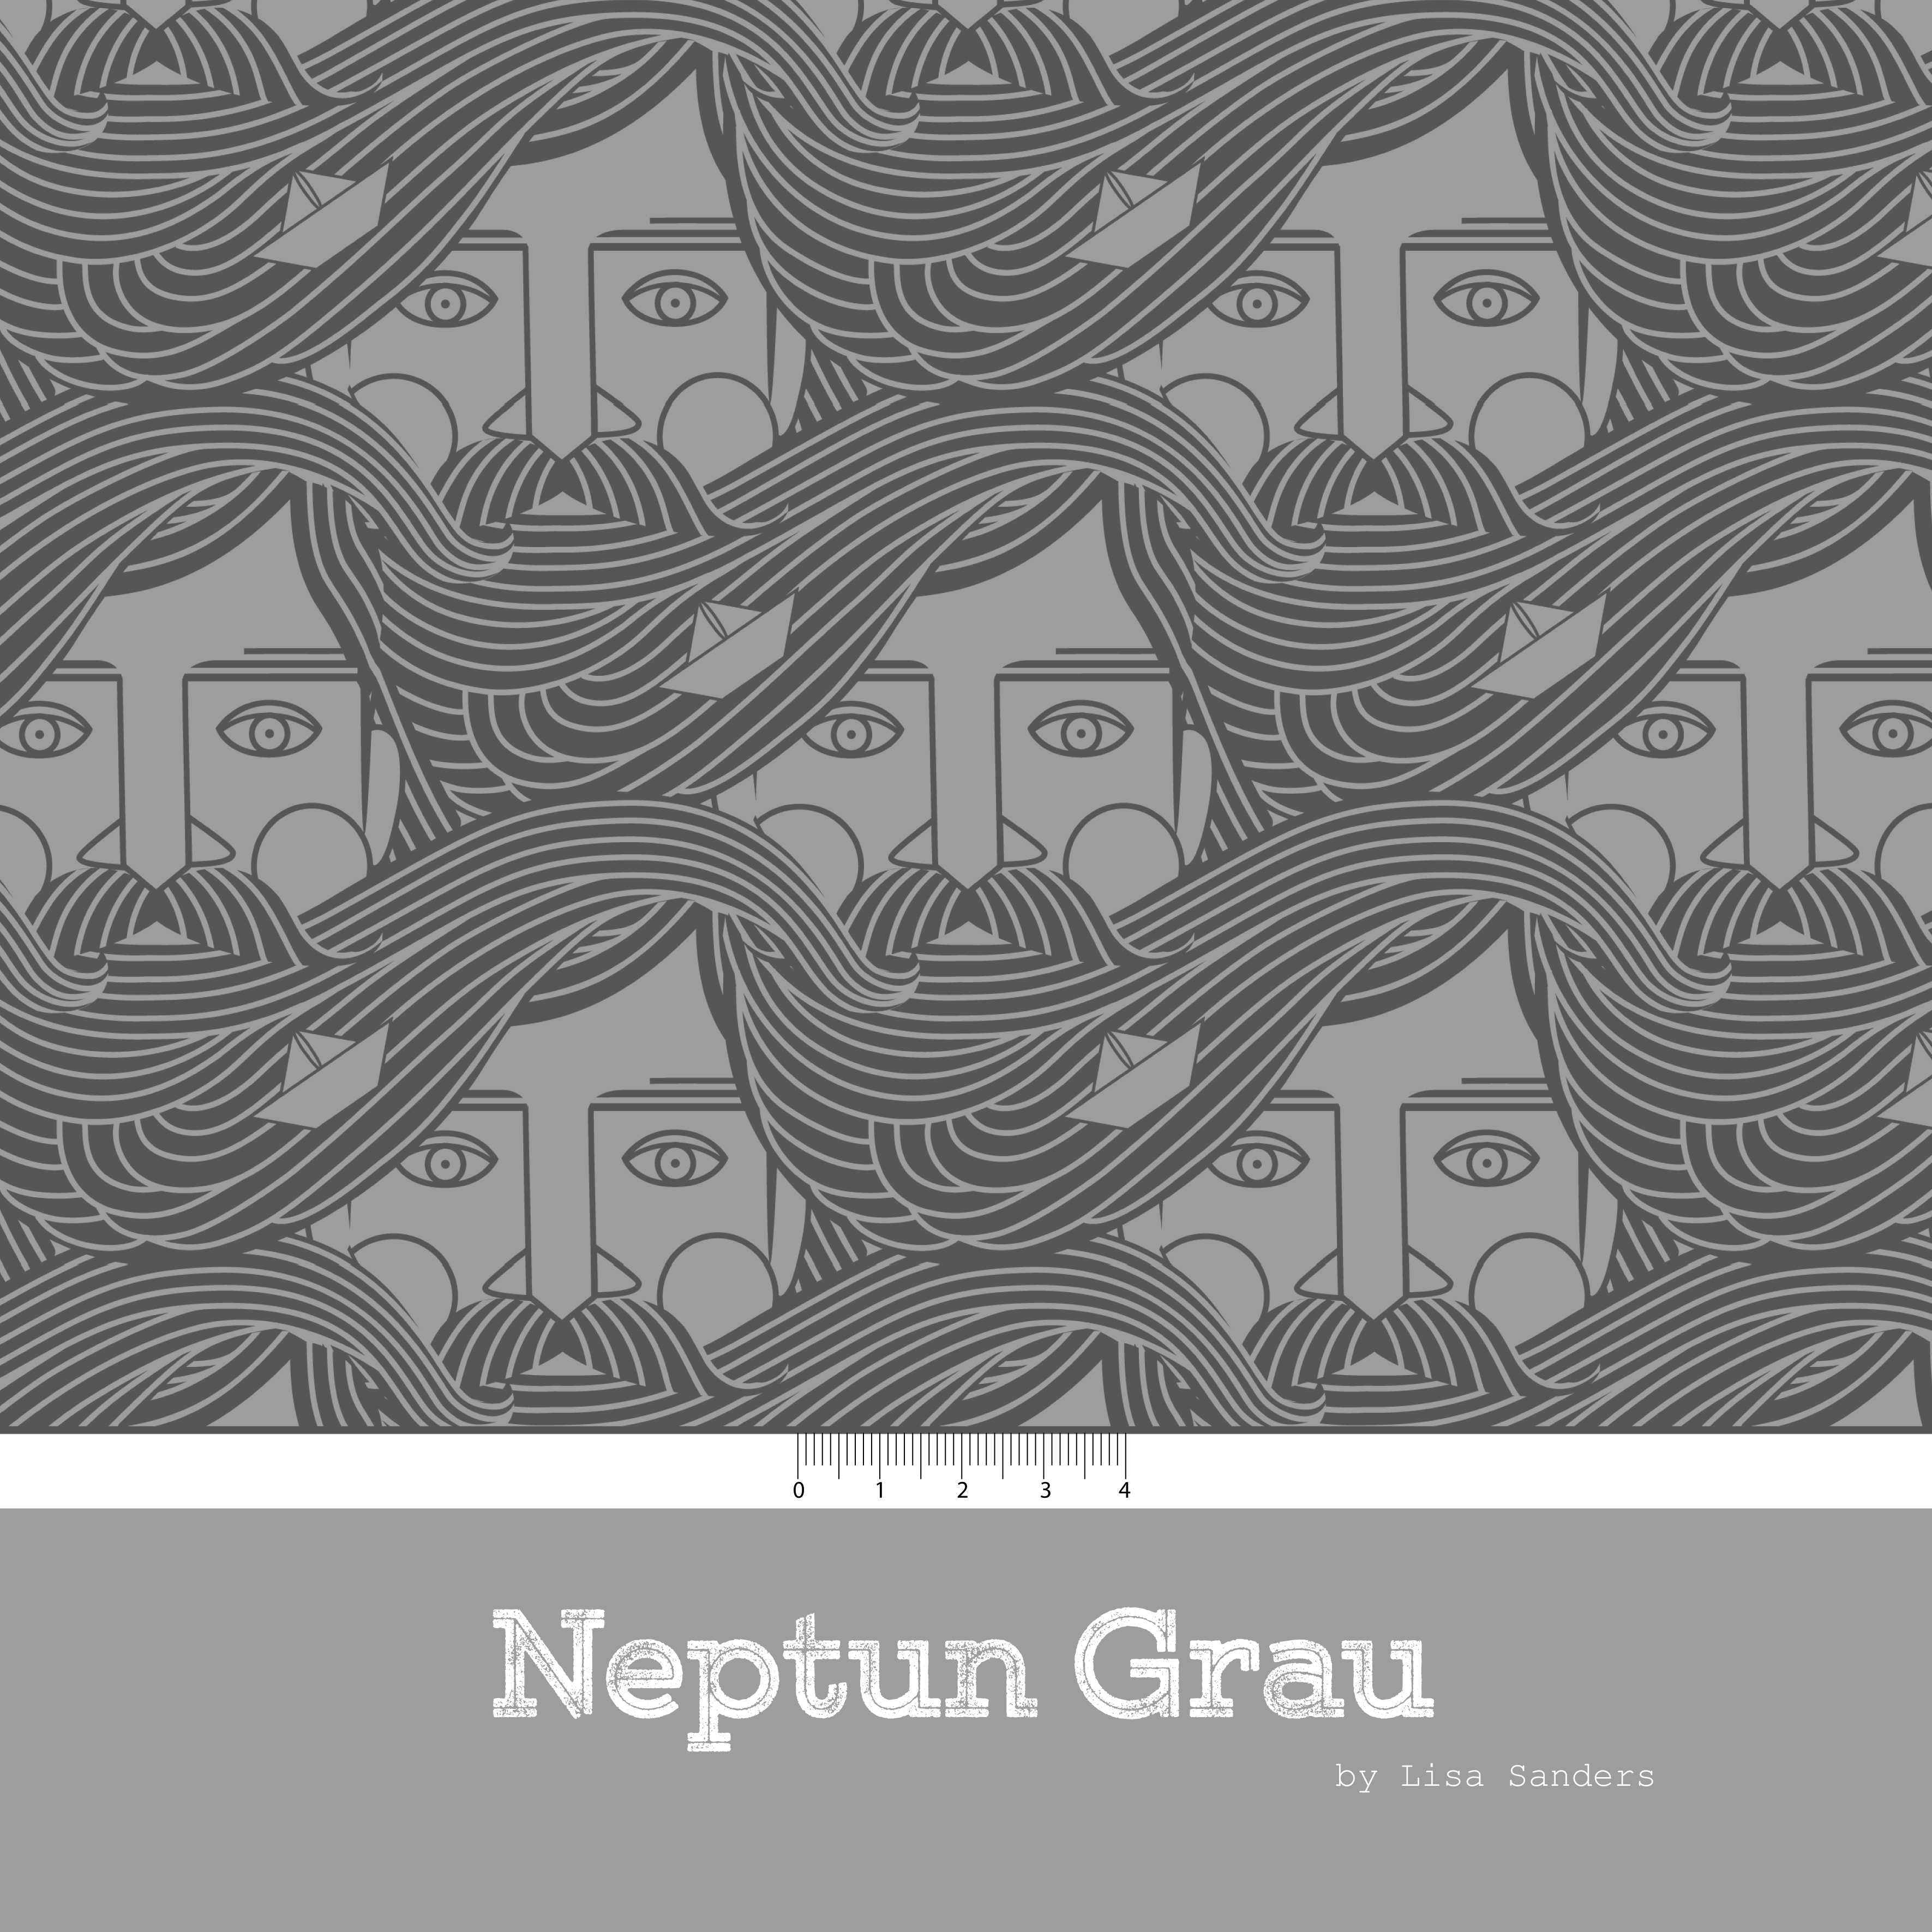 Neptun Grau